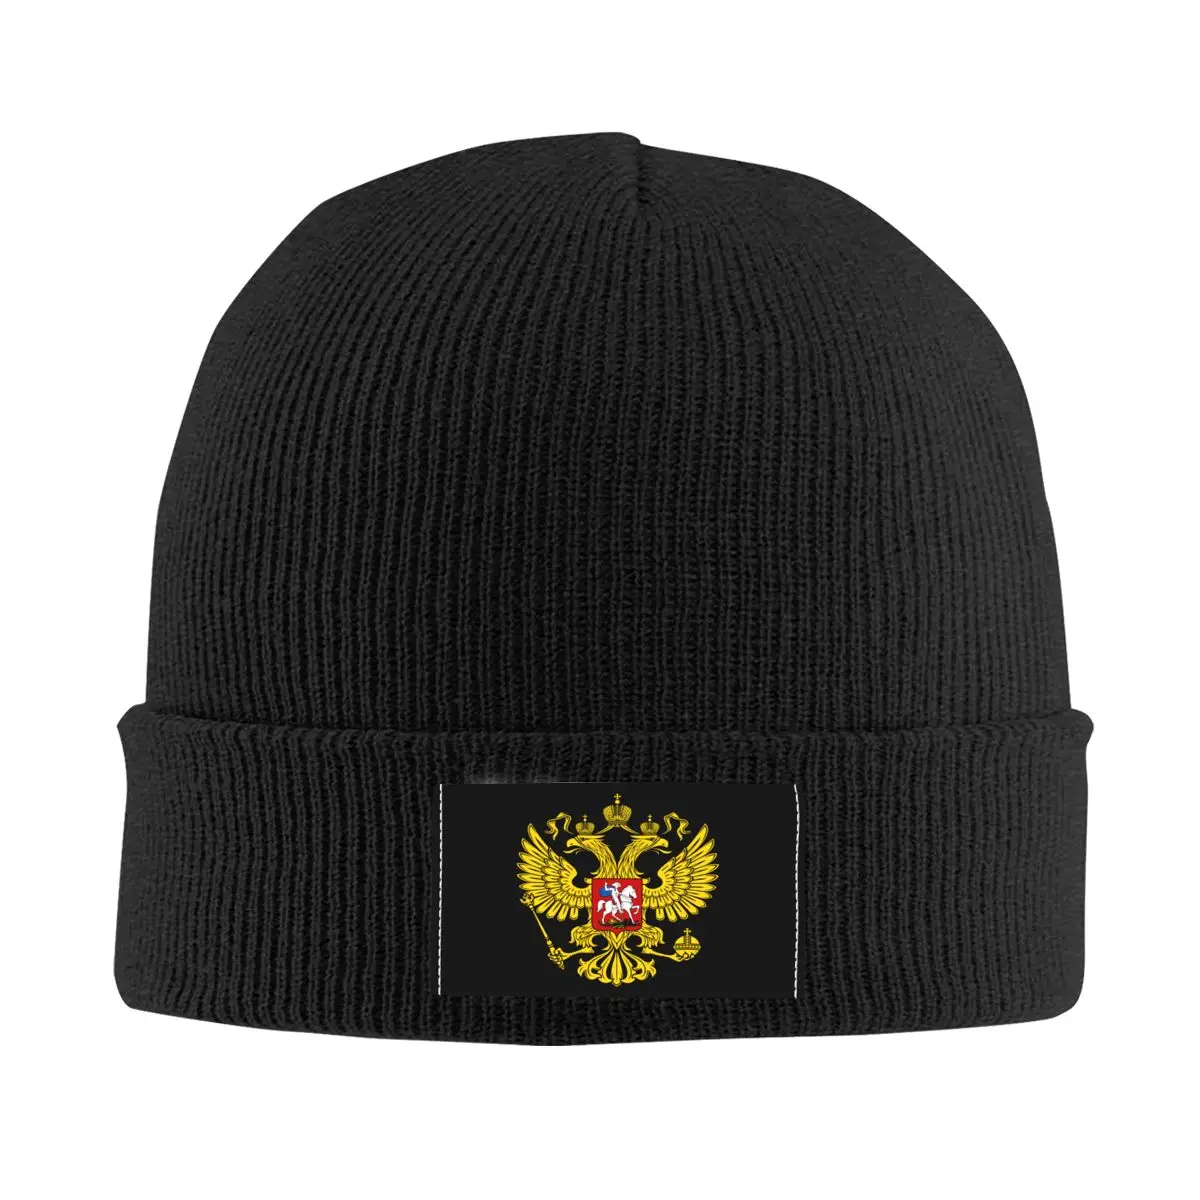 Coat Of Arms Of Russia Bonnet Hat Knitted Hats Men Women Cool Unisex Russian Empire Warm Winter Beanies Cap 1